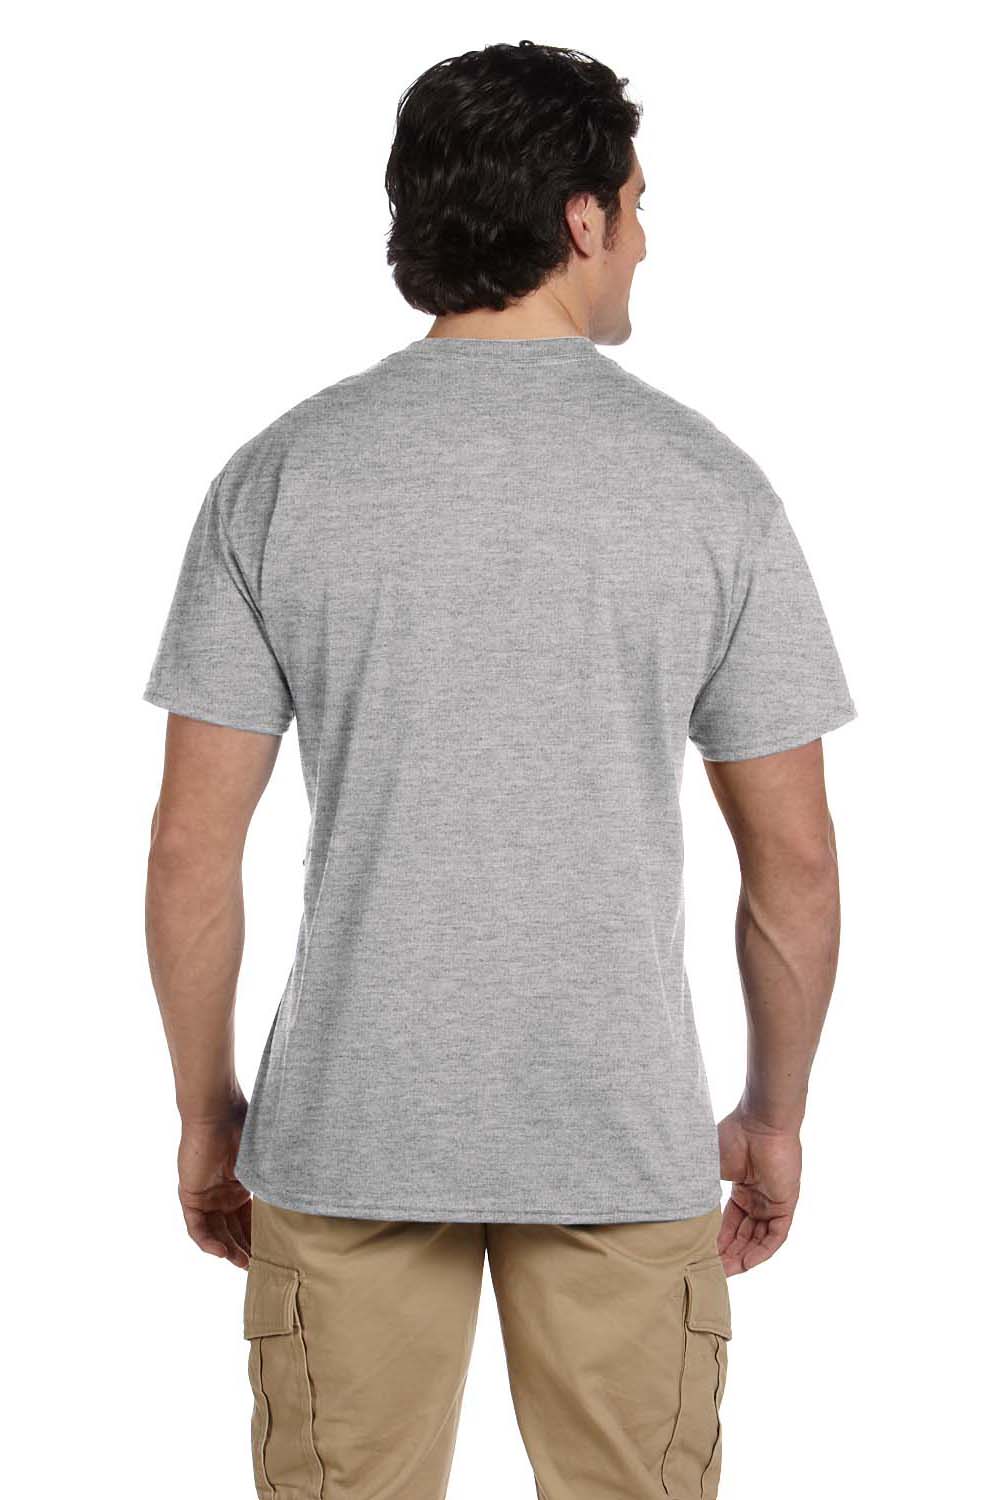 Gildan G830 Mens DryBlend Moisture Wicking Short Sleeve Crewneck T-Shirt w/ Pocket Sport Grey Back